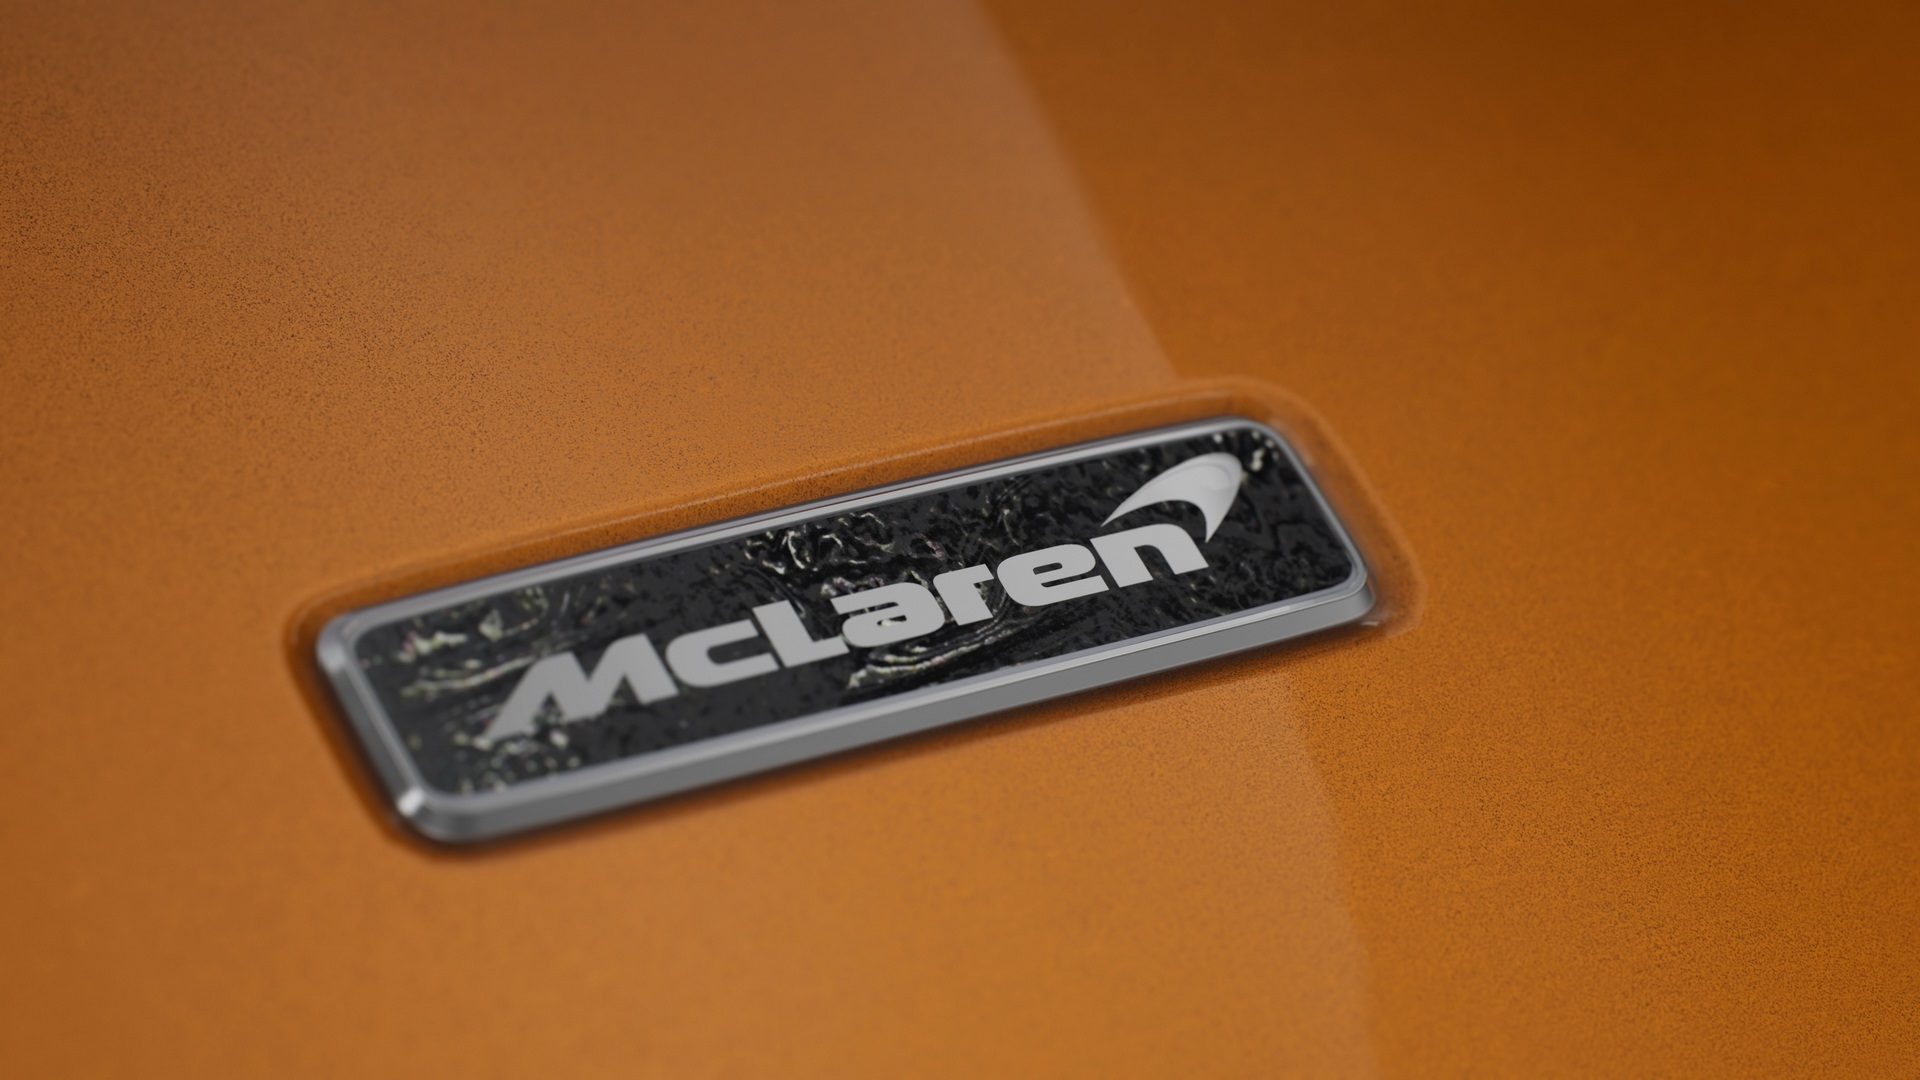 McLaren badge